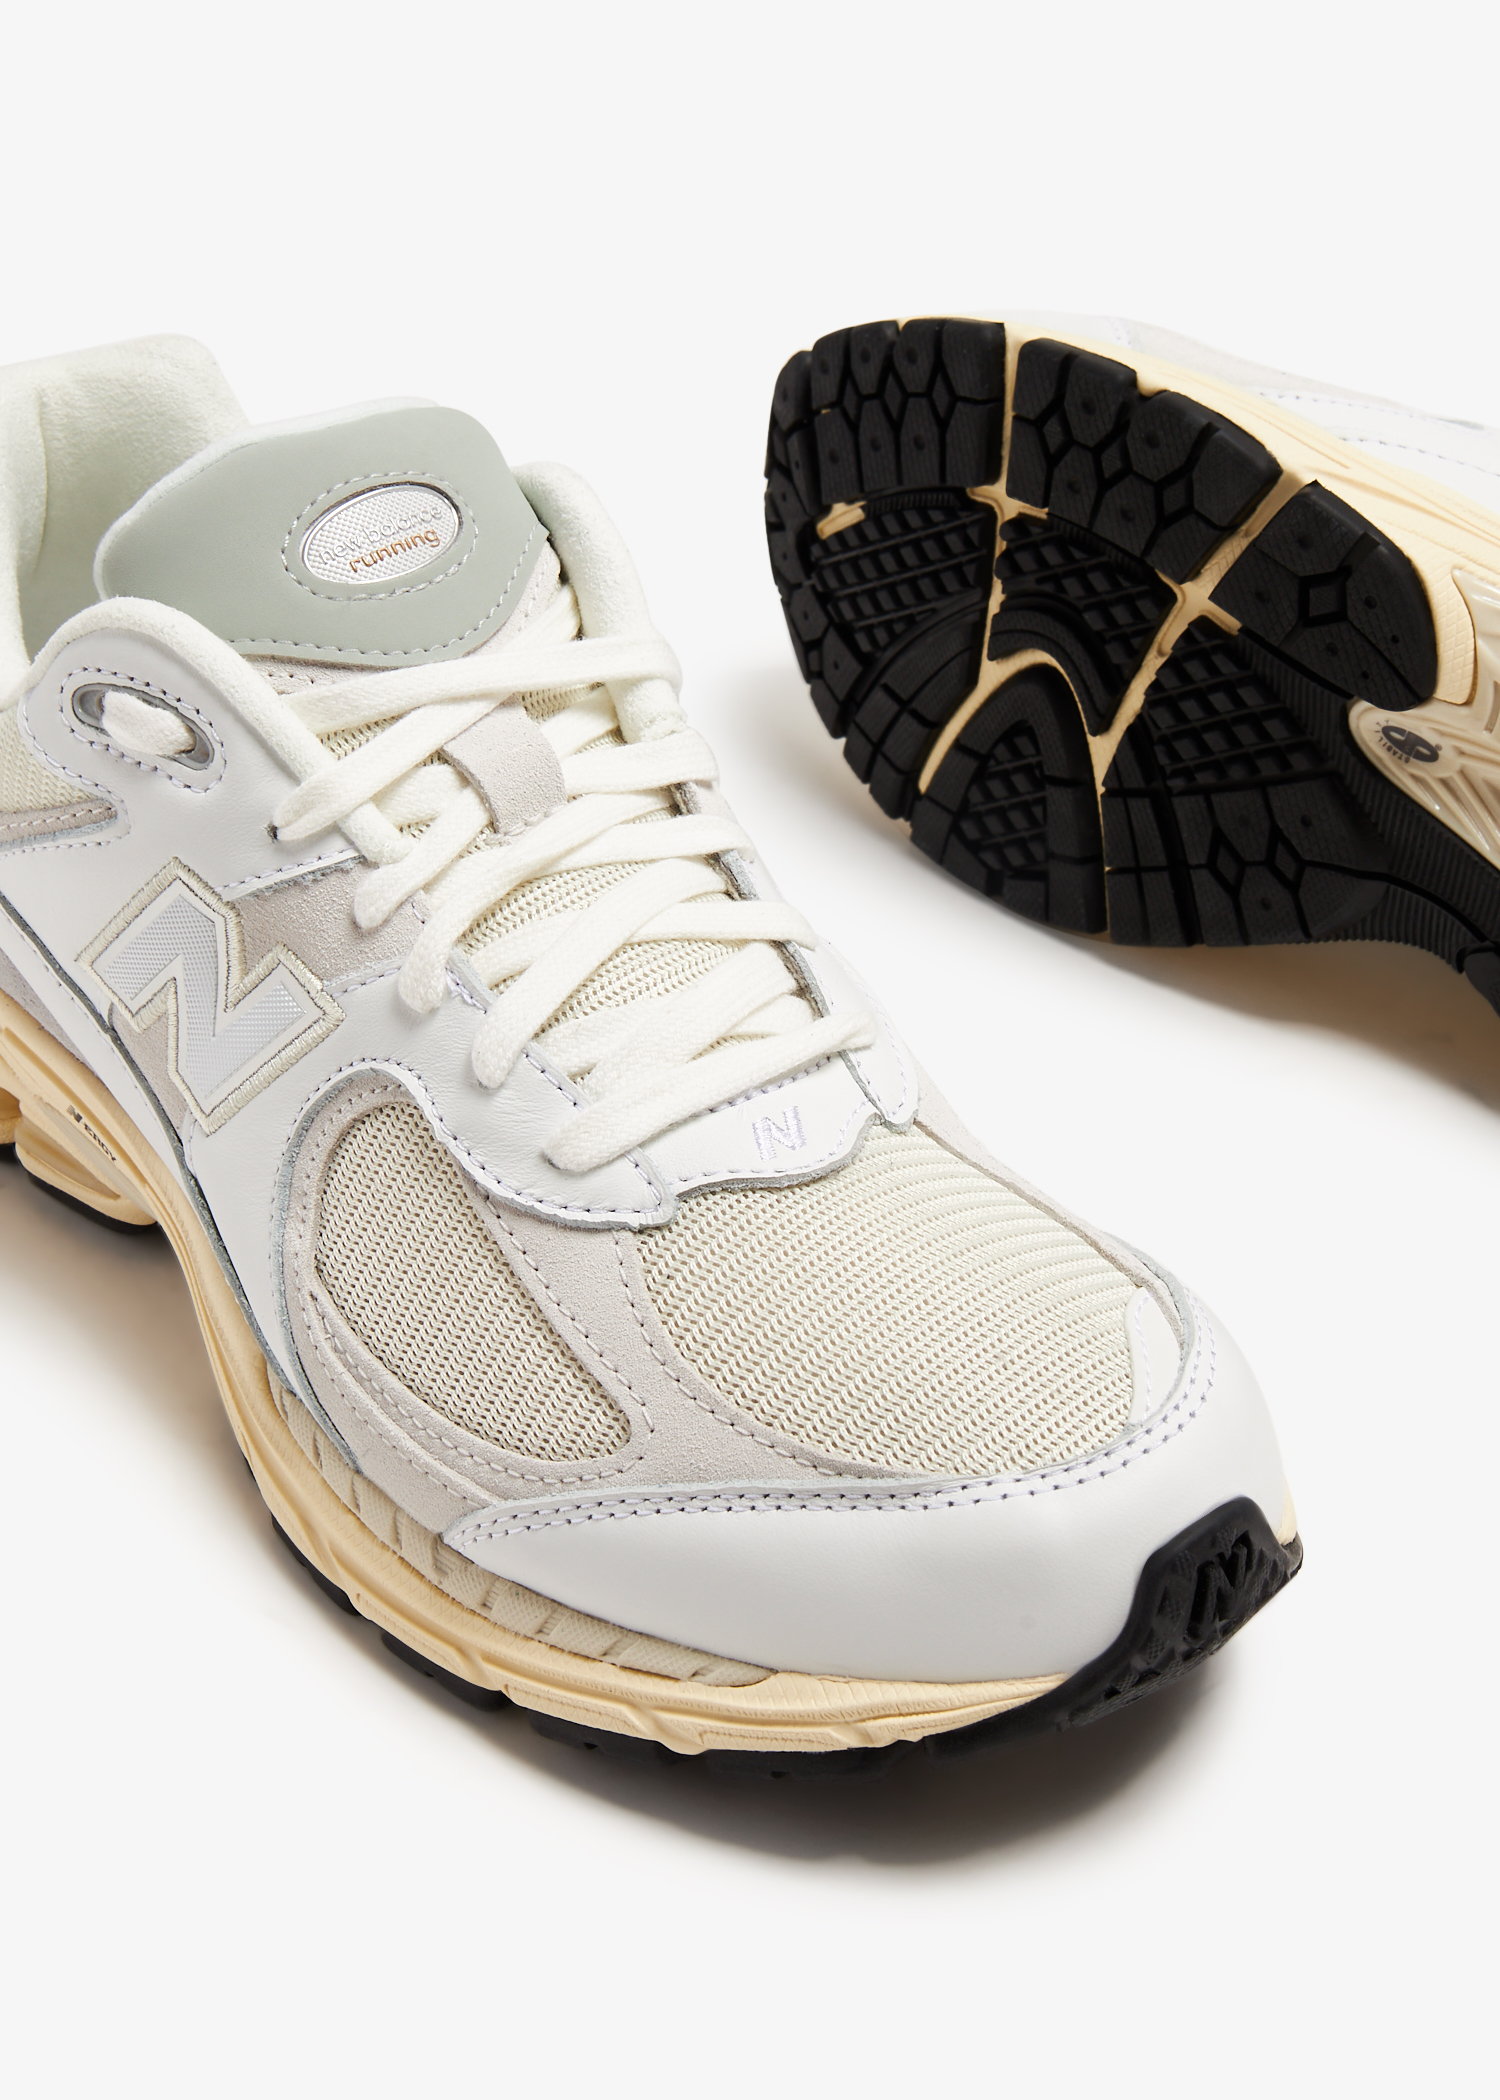 New Balance 2002R sneakers for Men, Women - White in KSA | Level Shoes